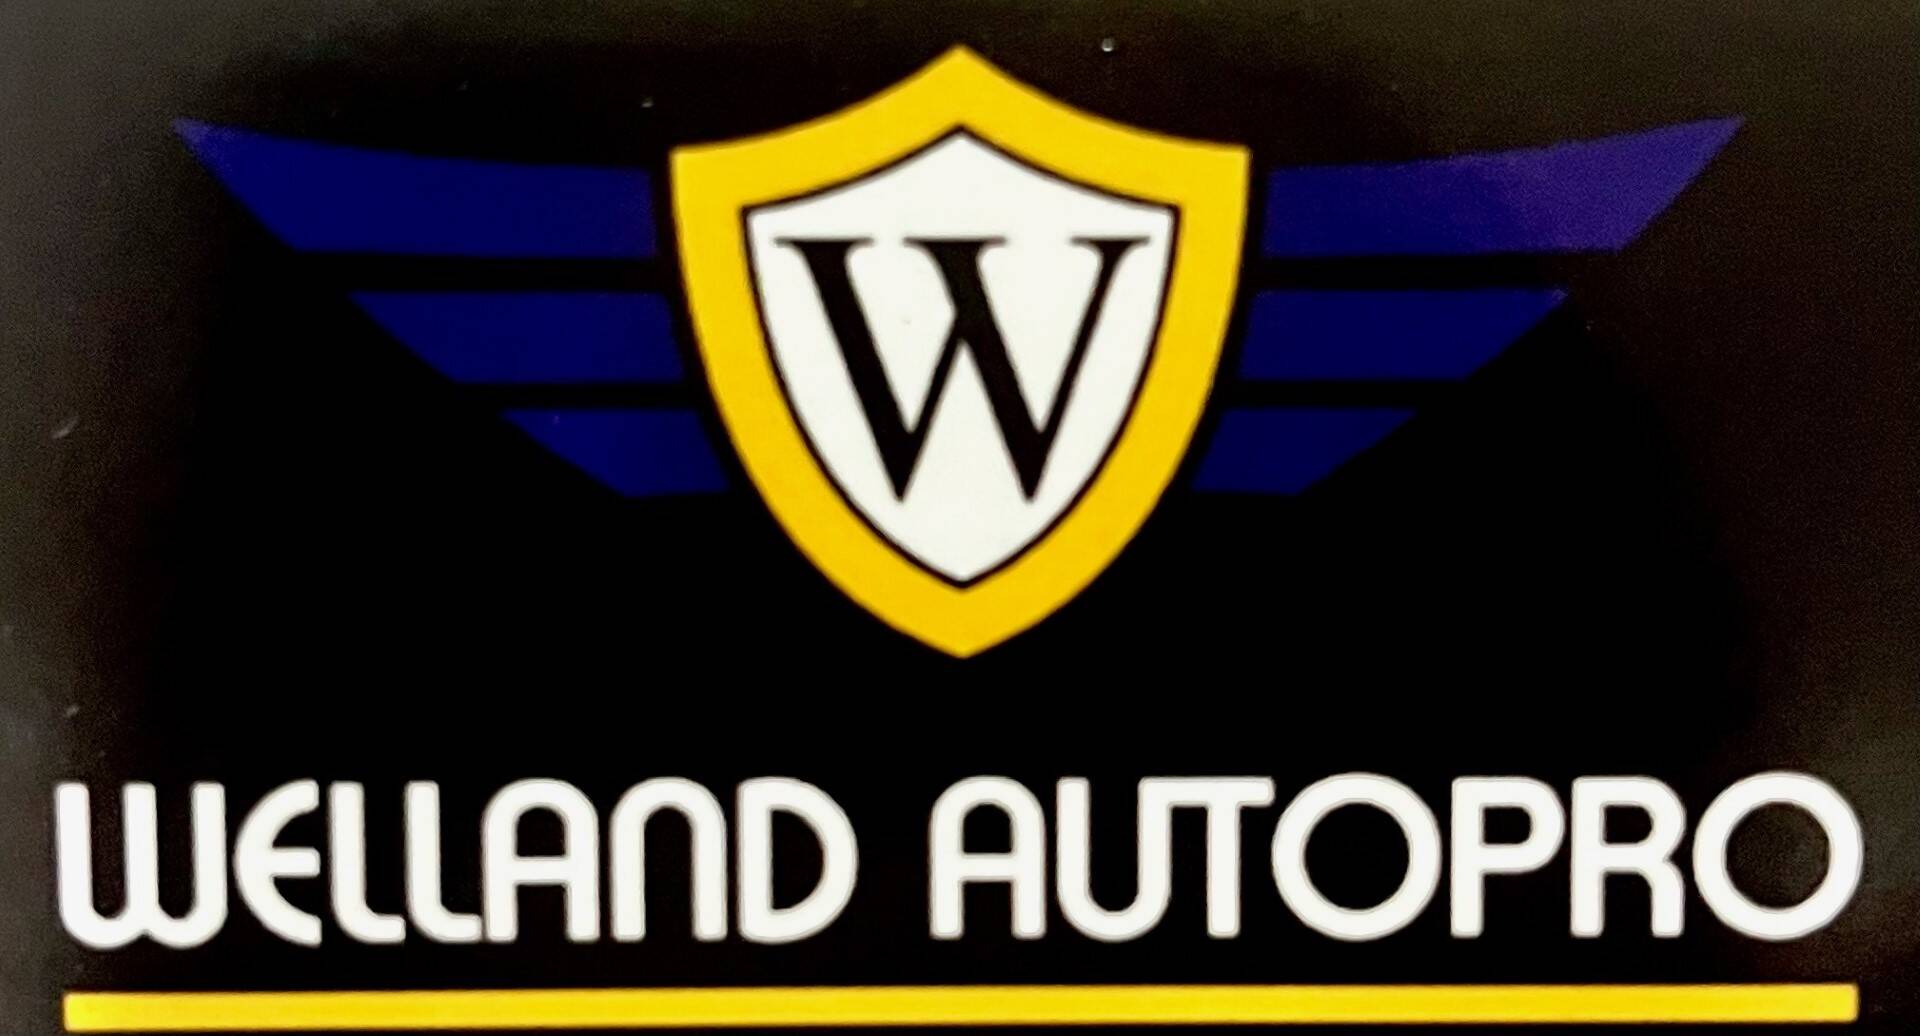 Welland Autopro